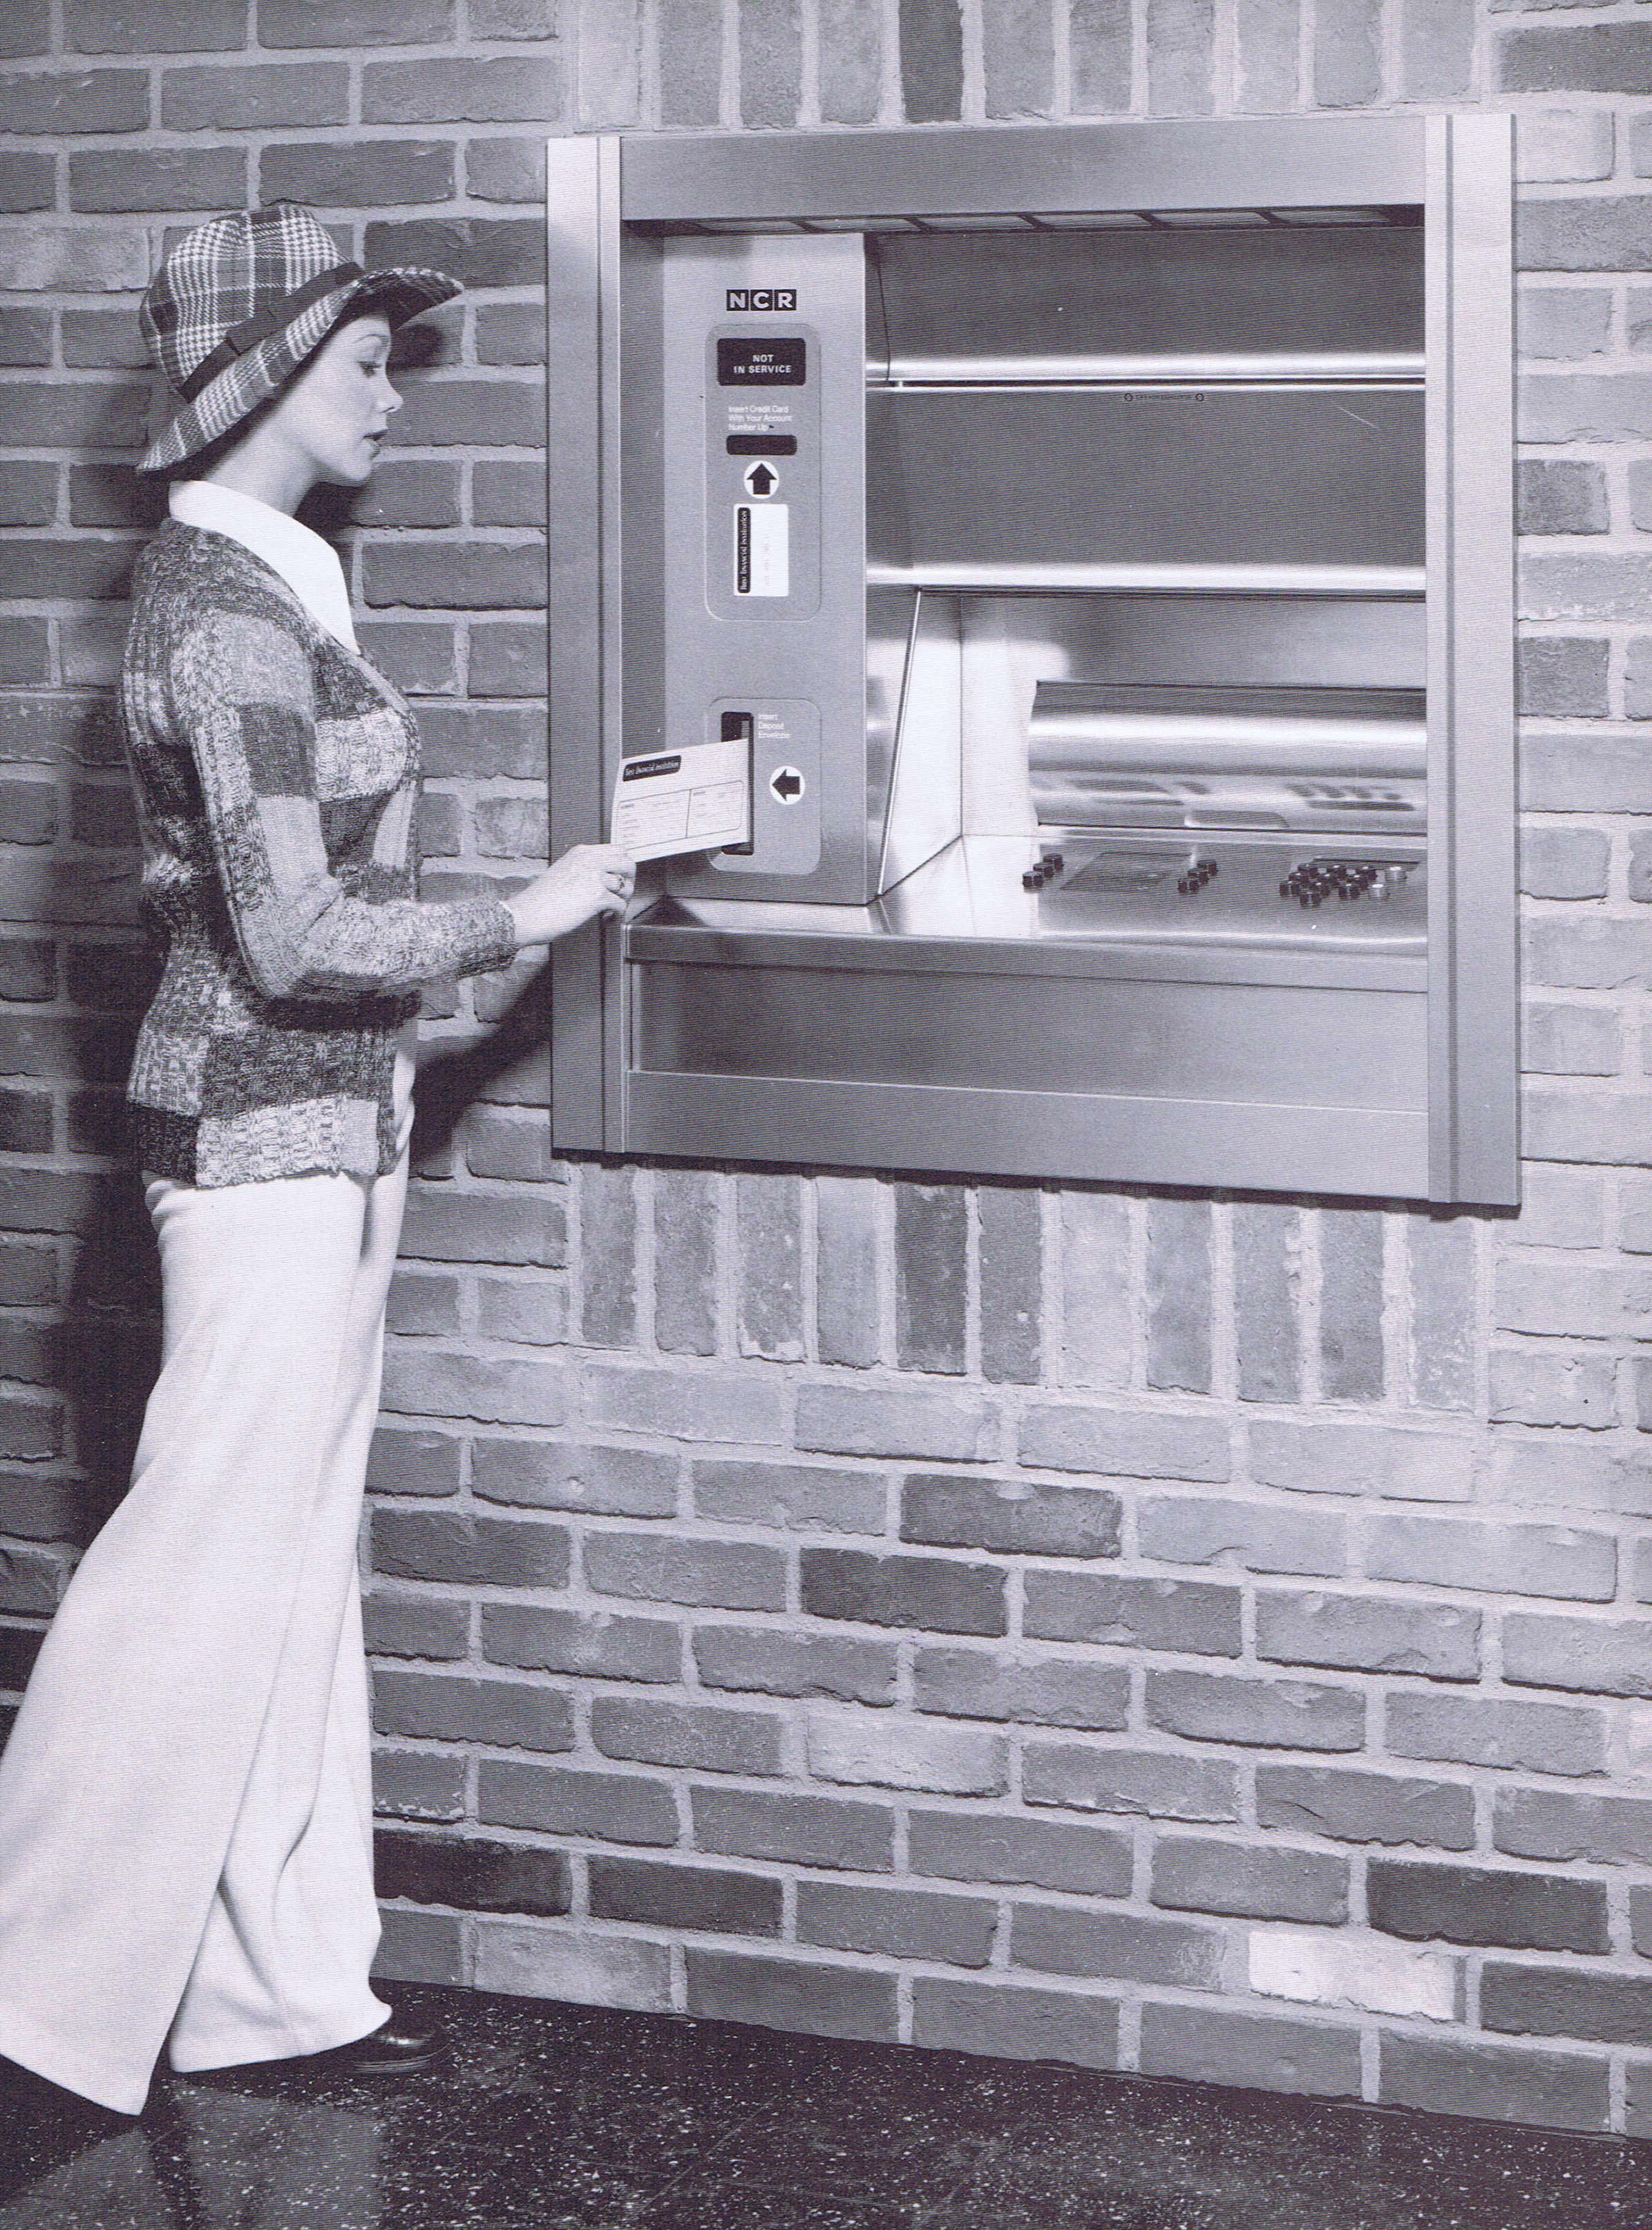 A History of ATM Innovation | NCR